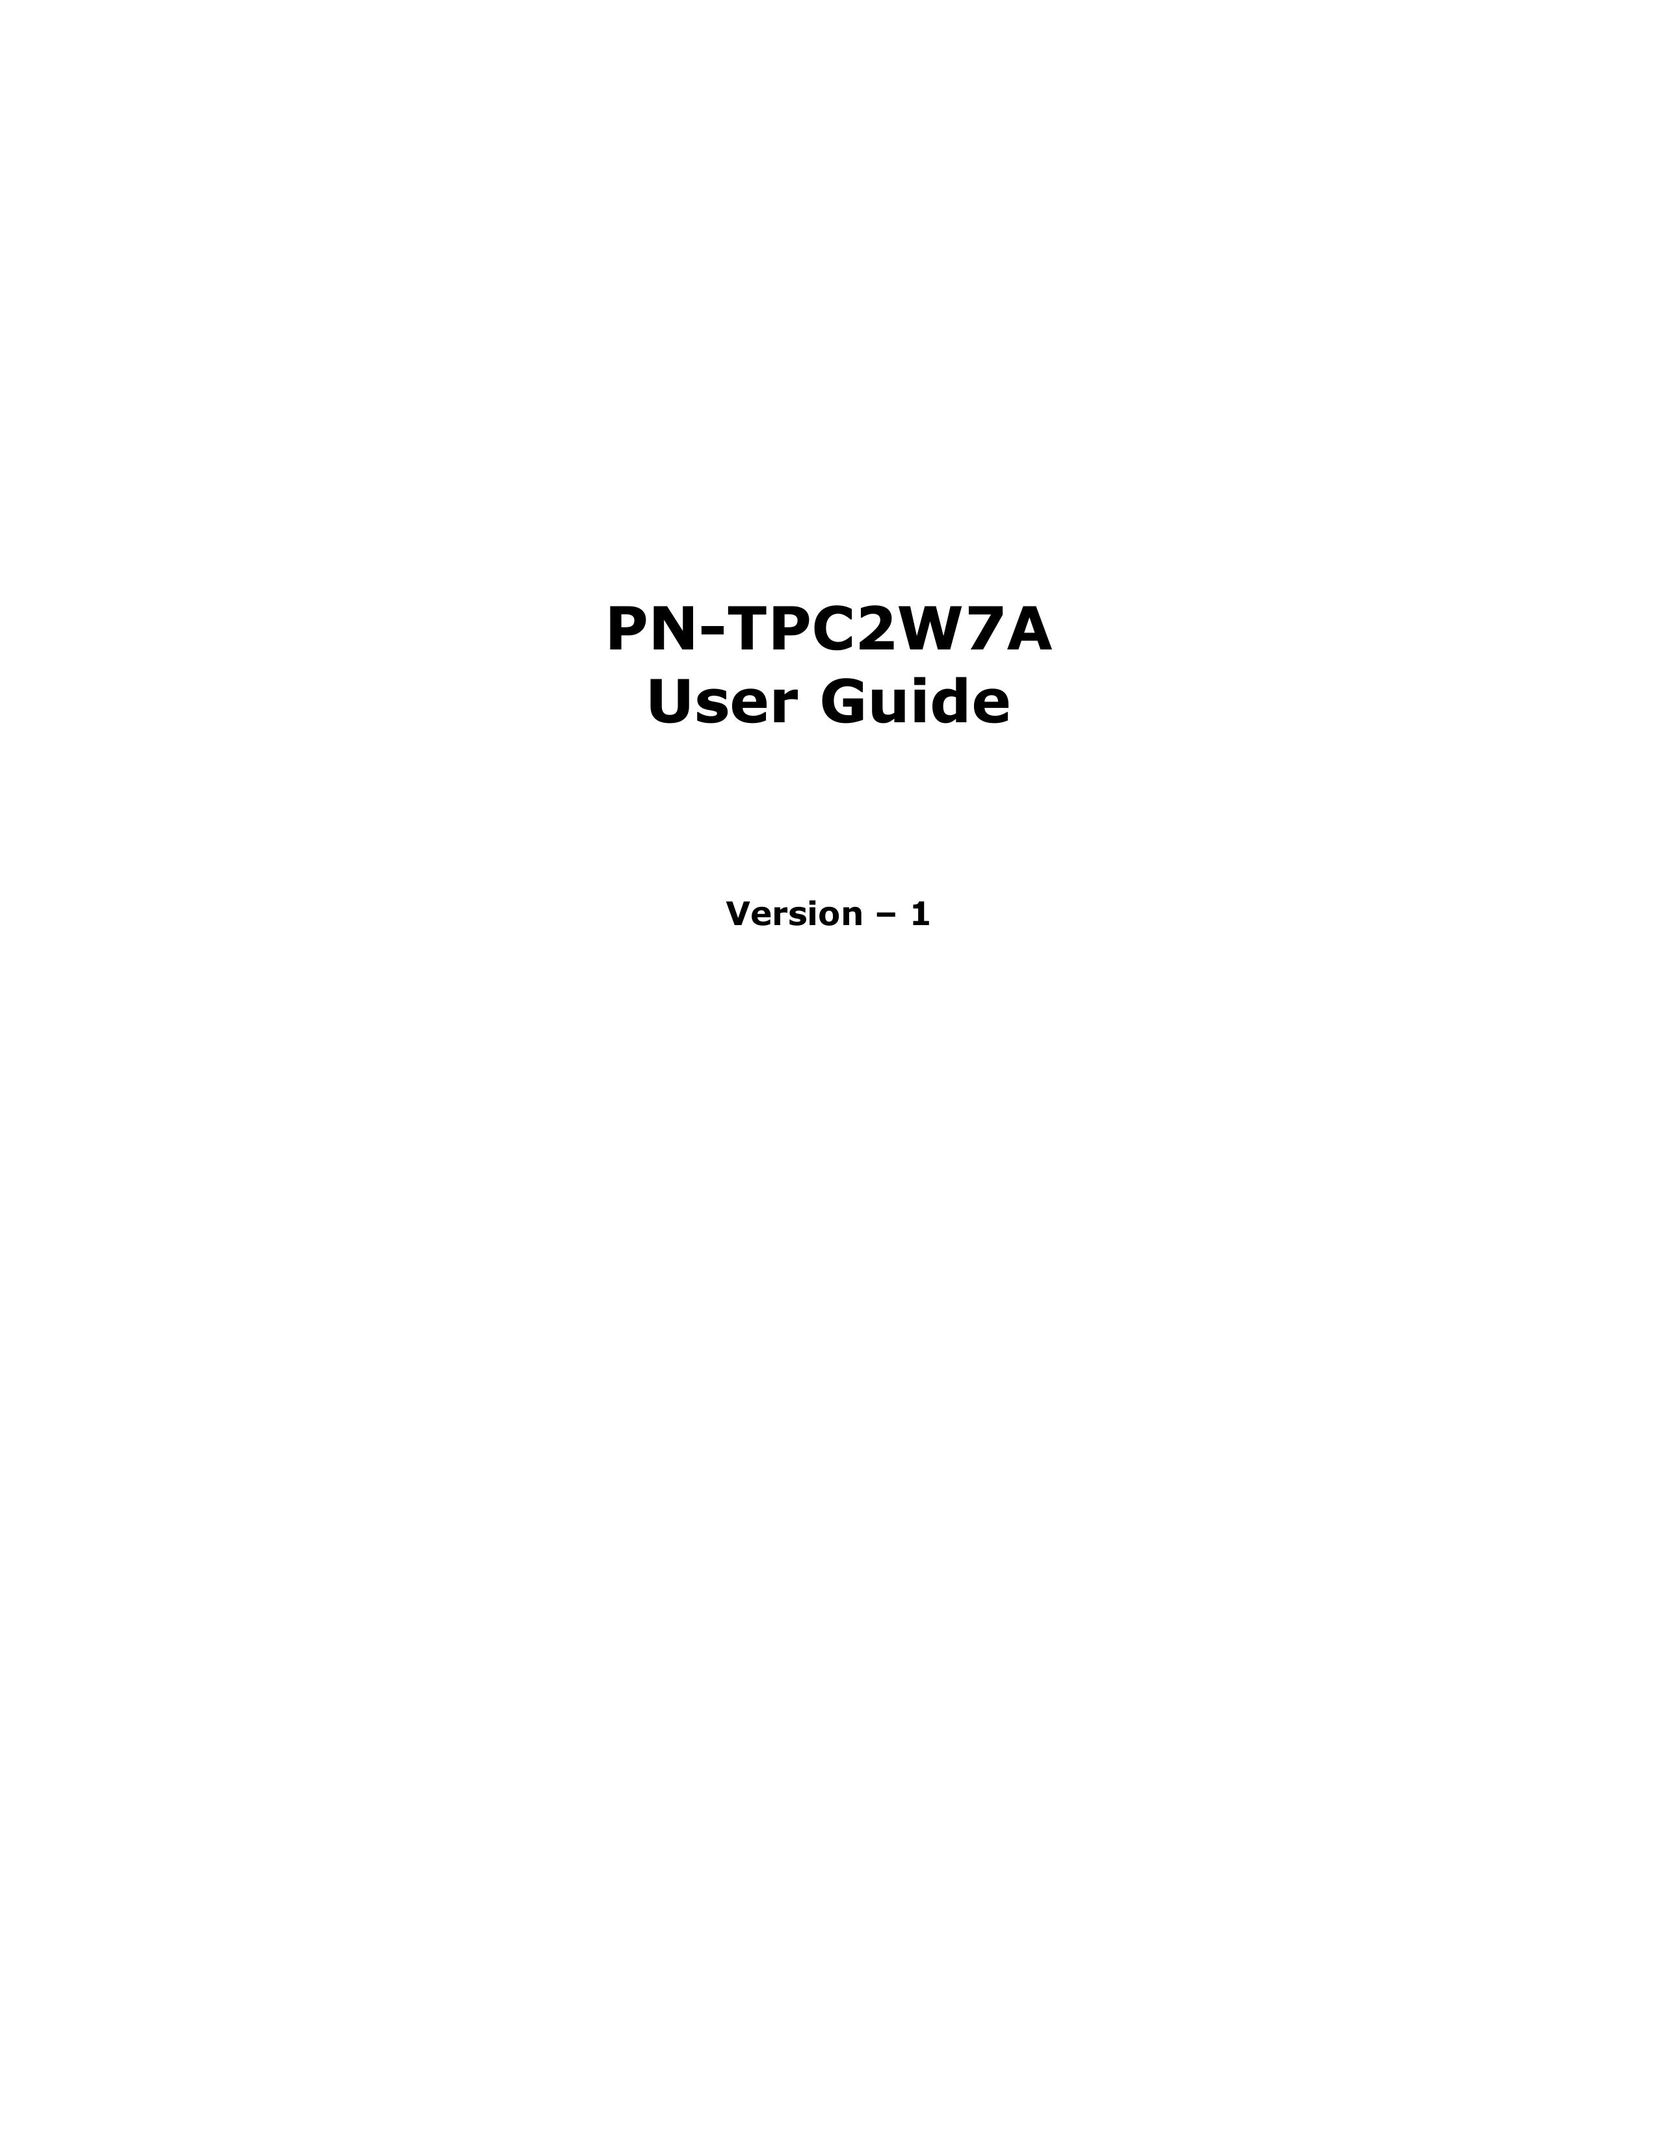 Sharp PNTPC2W7A Personal Computer User Manual